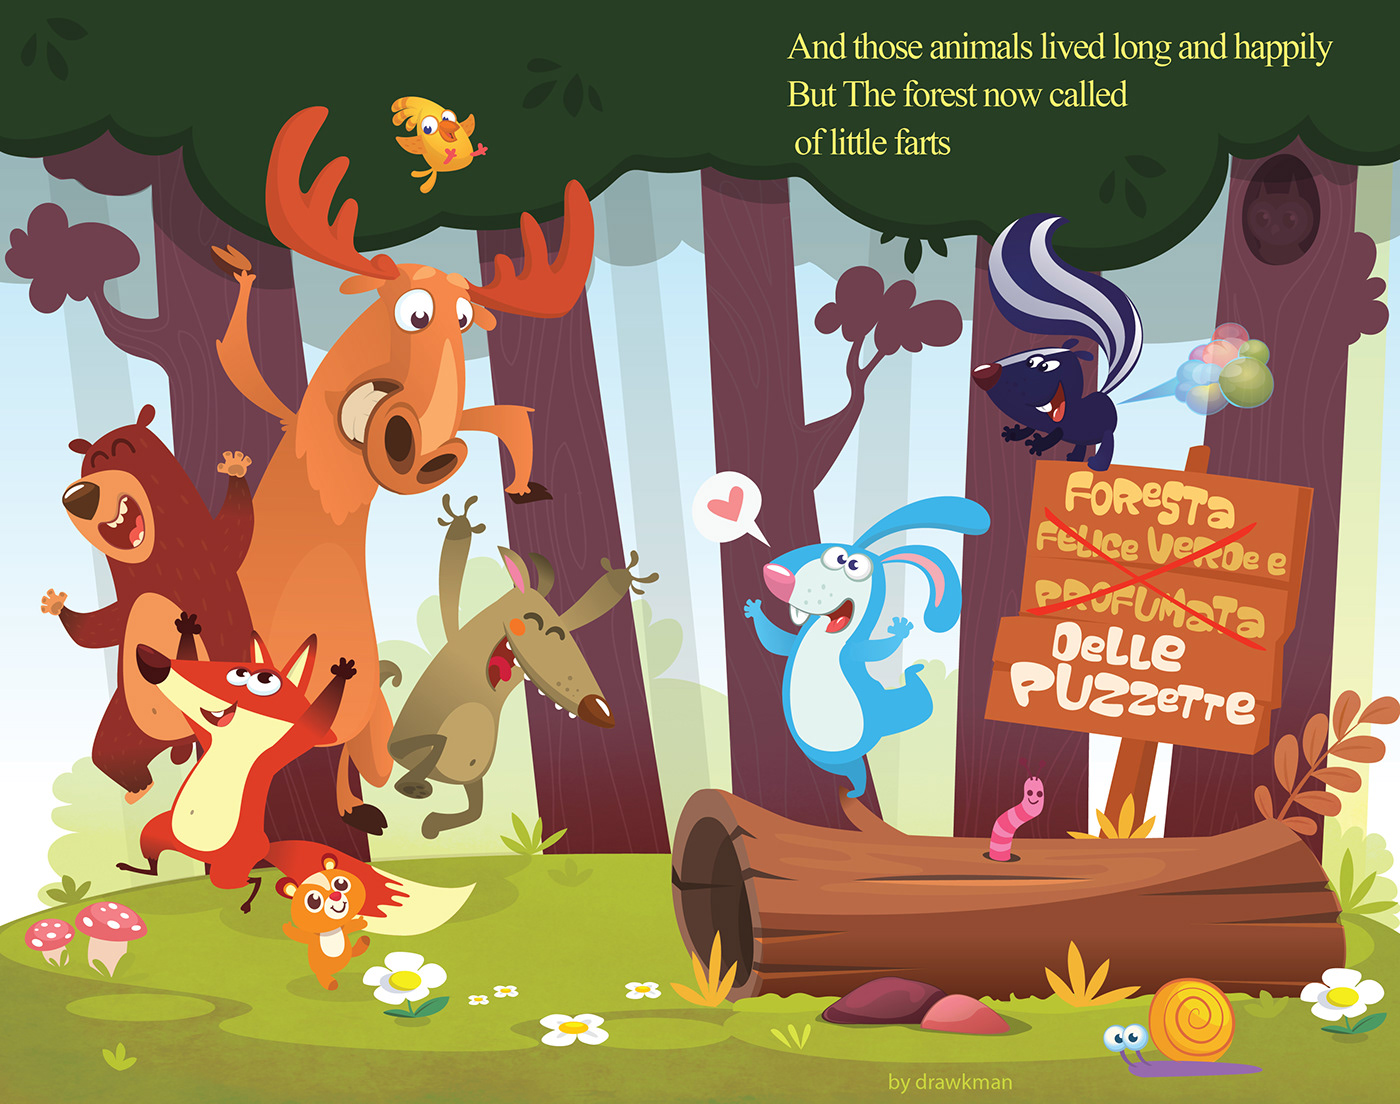 la foresta delle puzzette drawkman ILLUSTRATION  art book cartoon animals characters drawkmancartoon